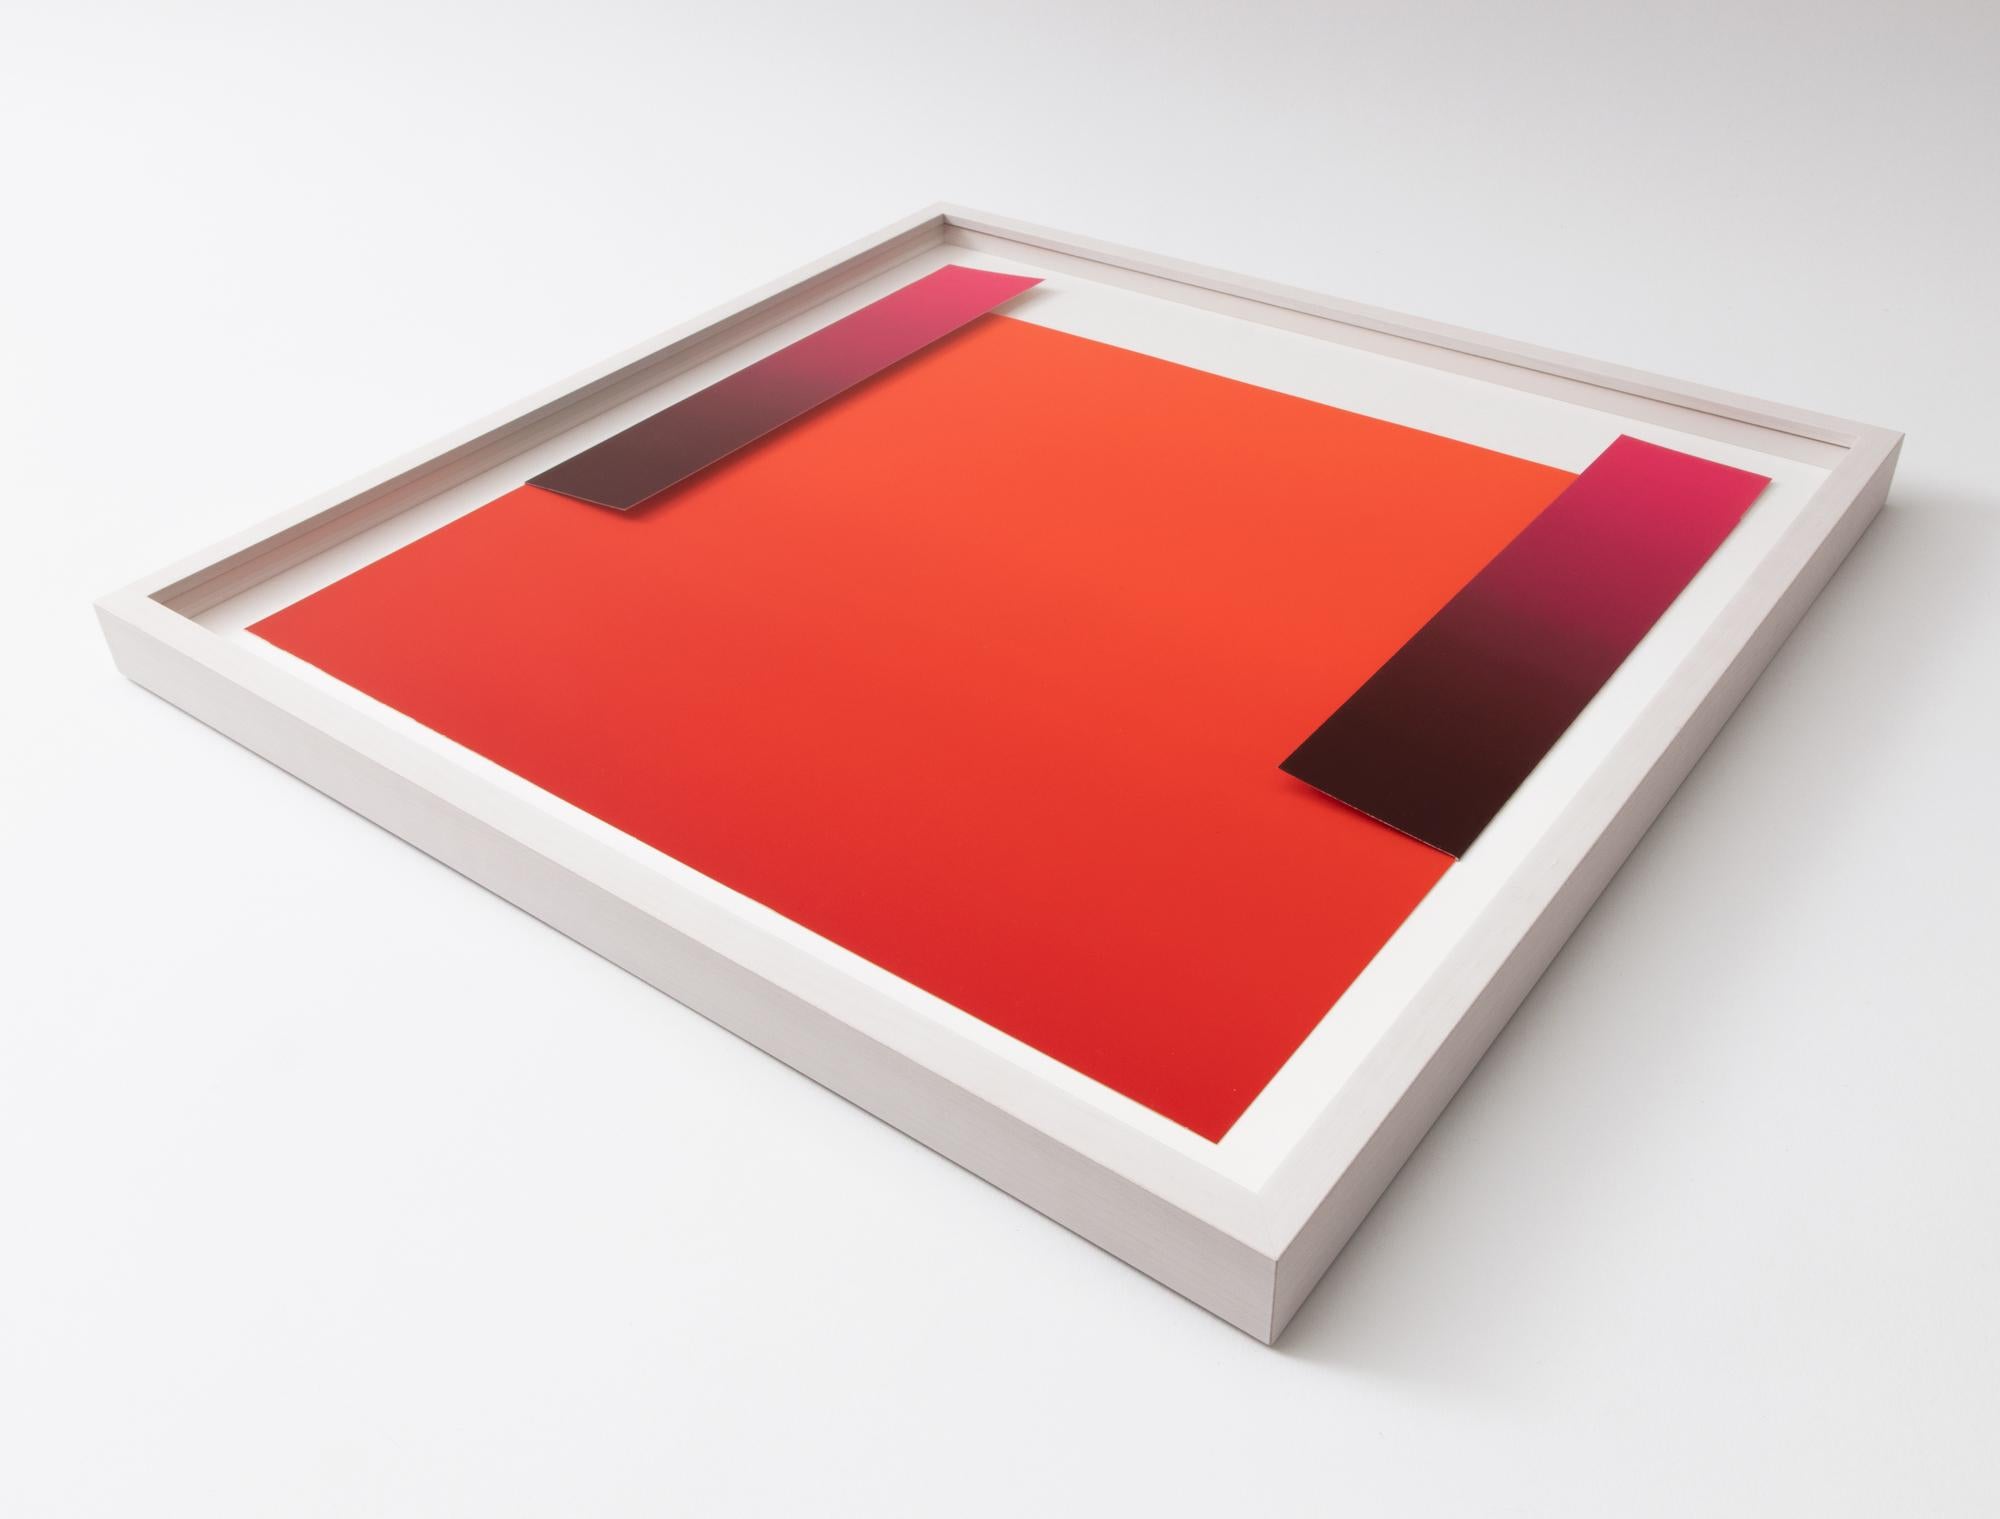 Warm and Cold Reds, Abstract Art, Minimalism, Modern Art, 20th Century - Print by Rupprecht Geiger